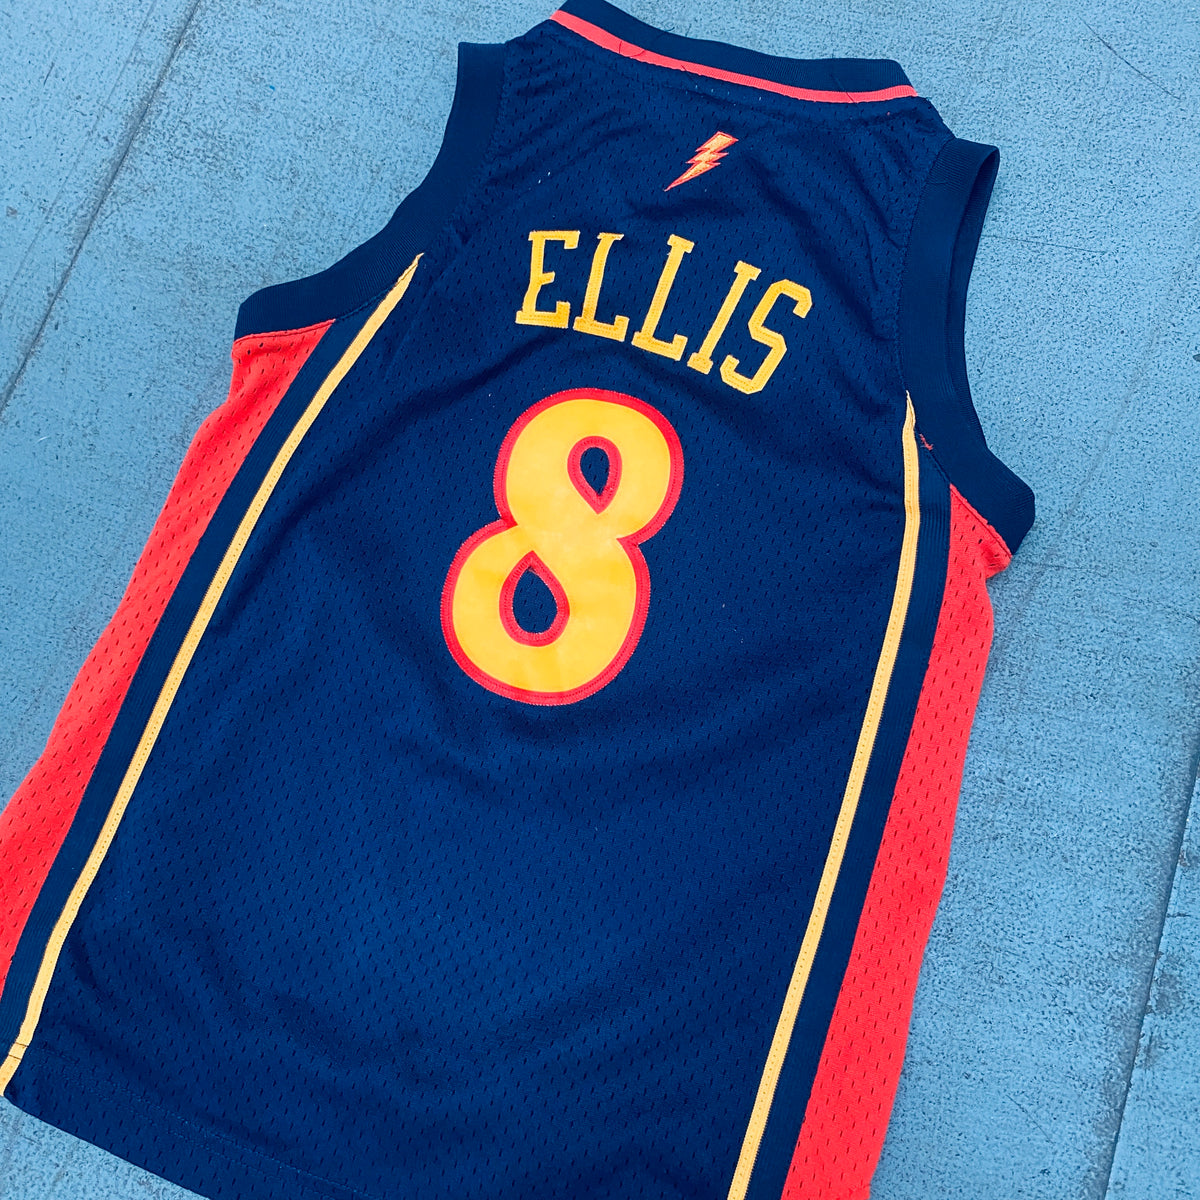 Golden State Warriors Basketball Jersey Adidas 3XL +2 Ellis Sewn Logo  Stains